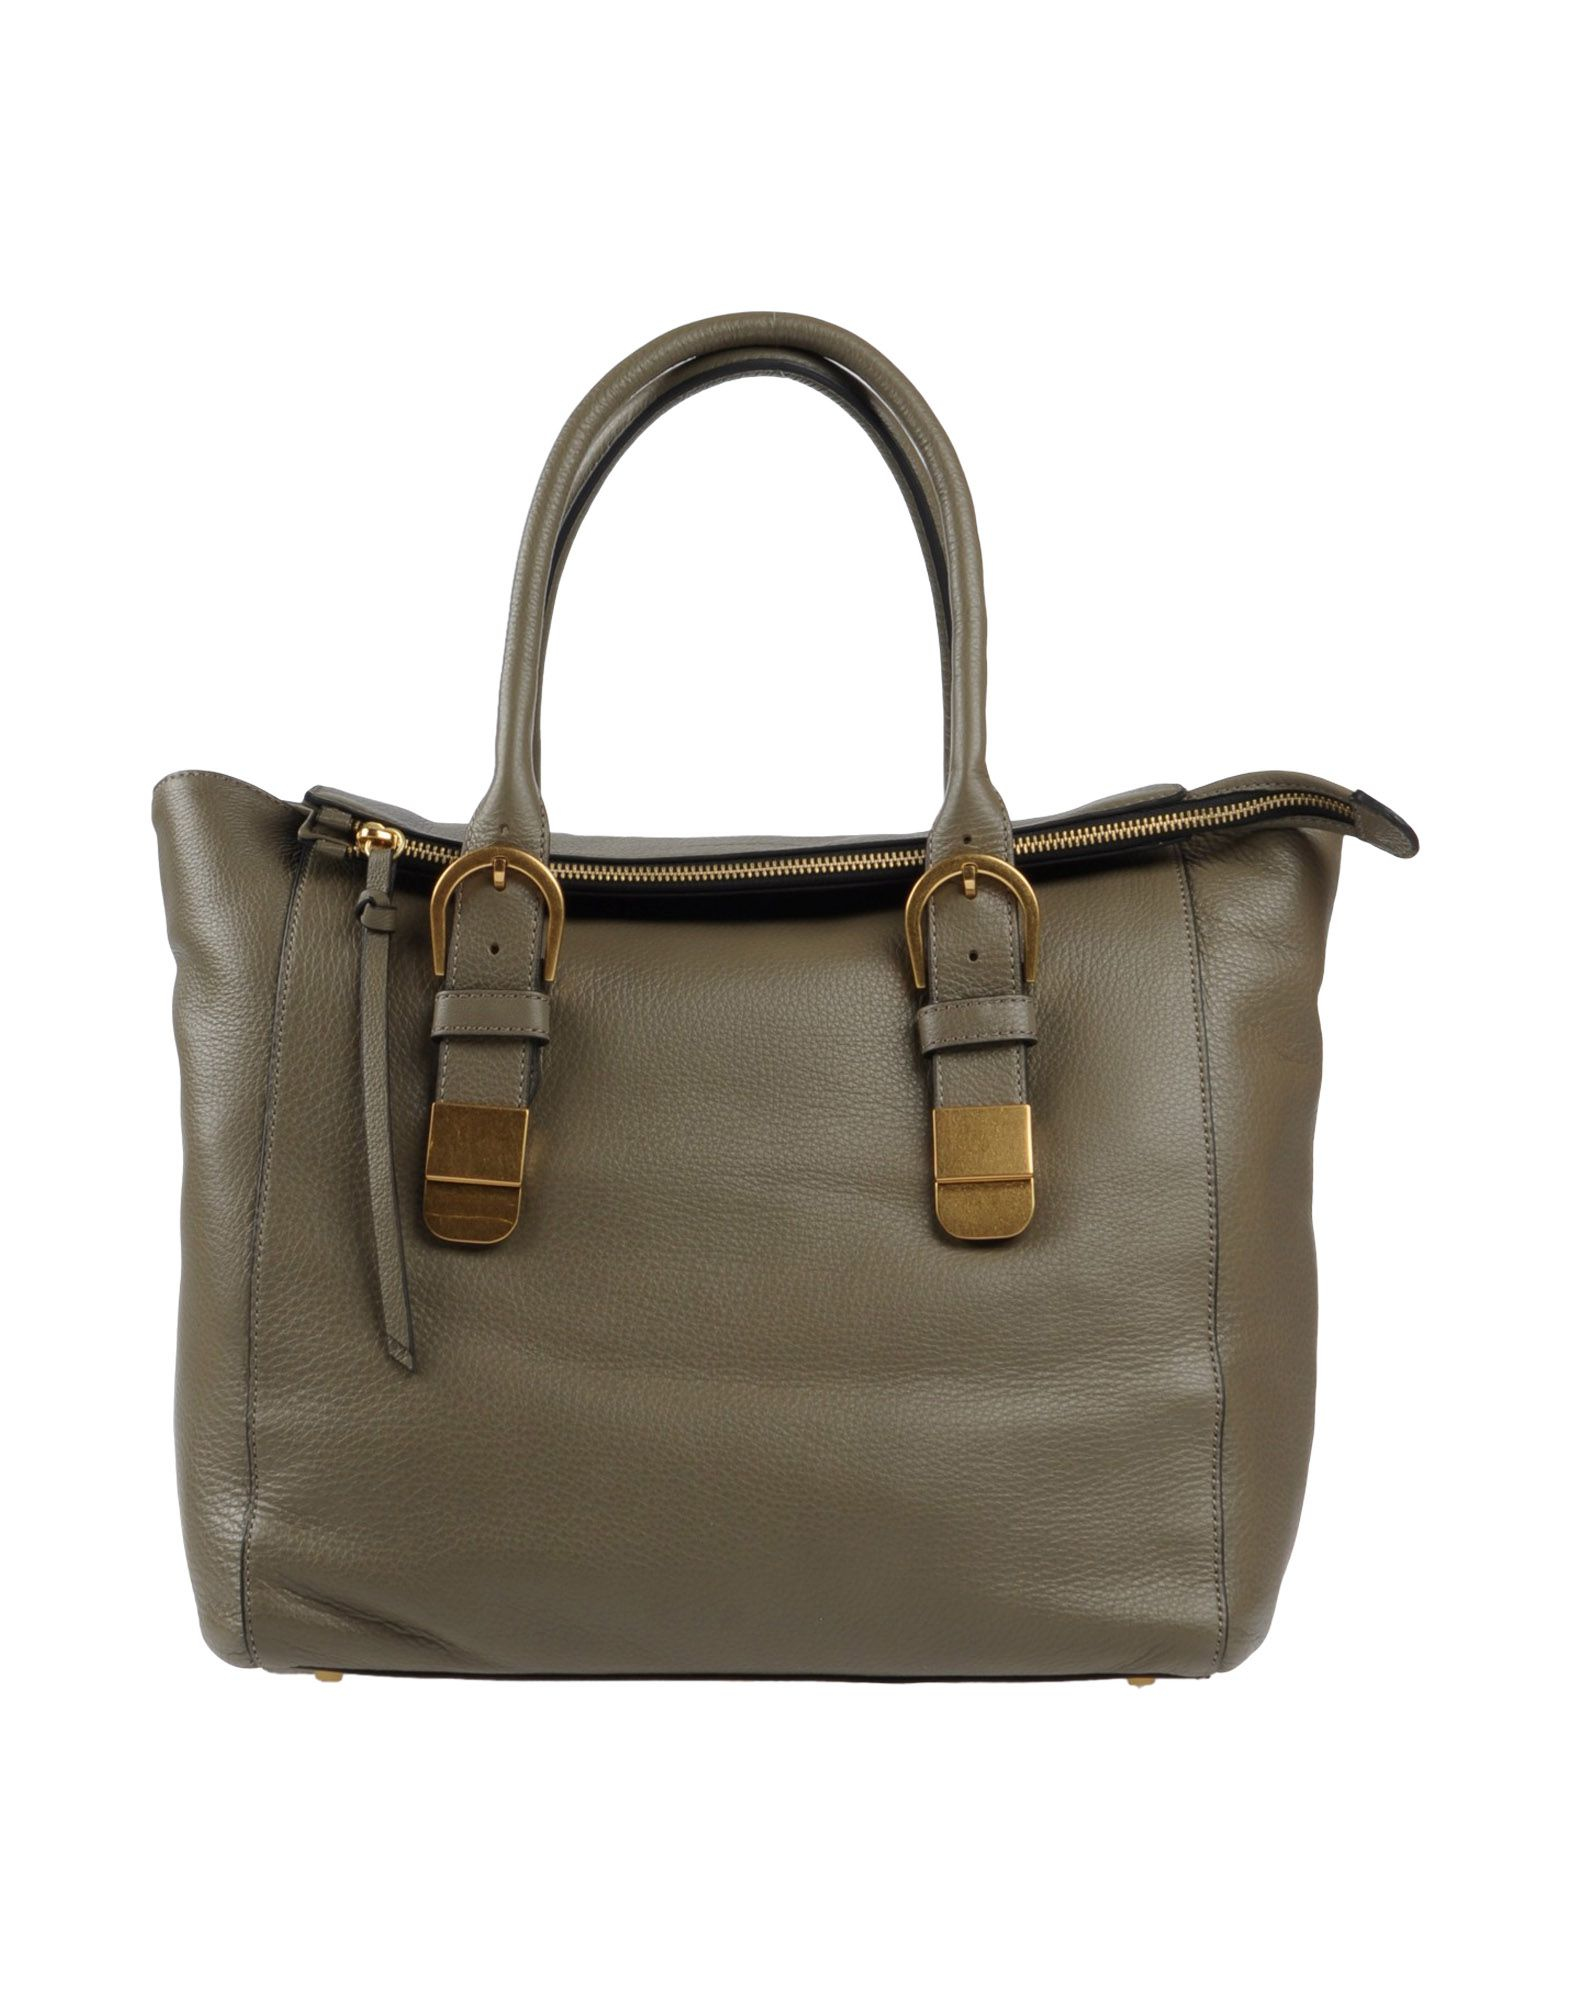 Lyst - Coccinelle Handbag in Green